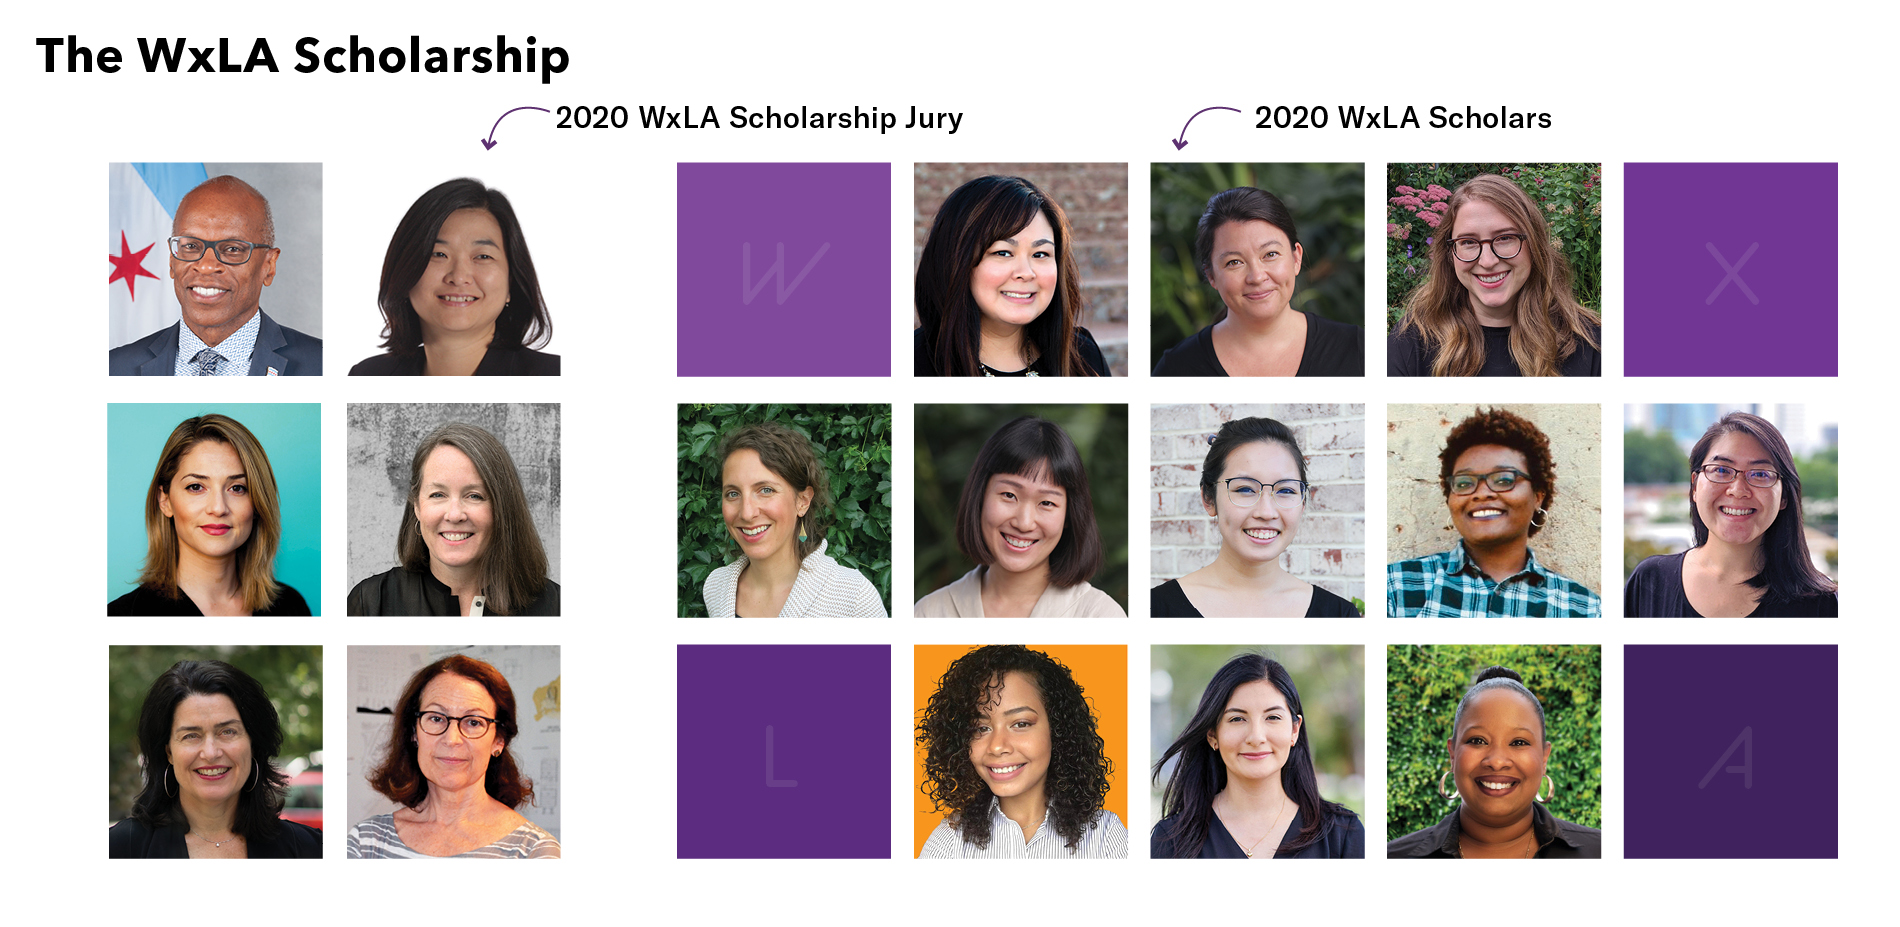 The WxLA Scholarship